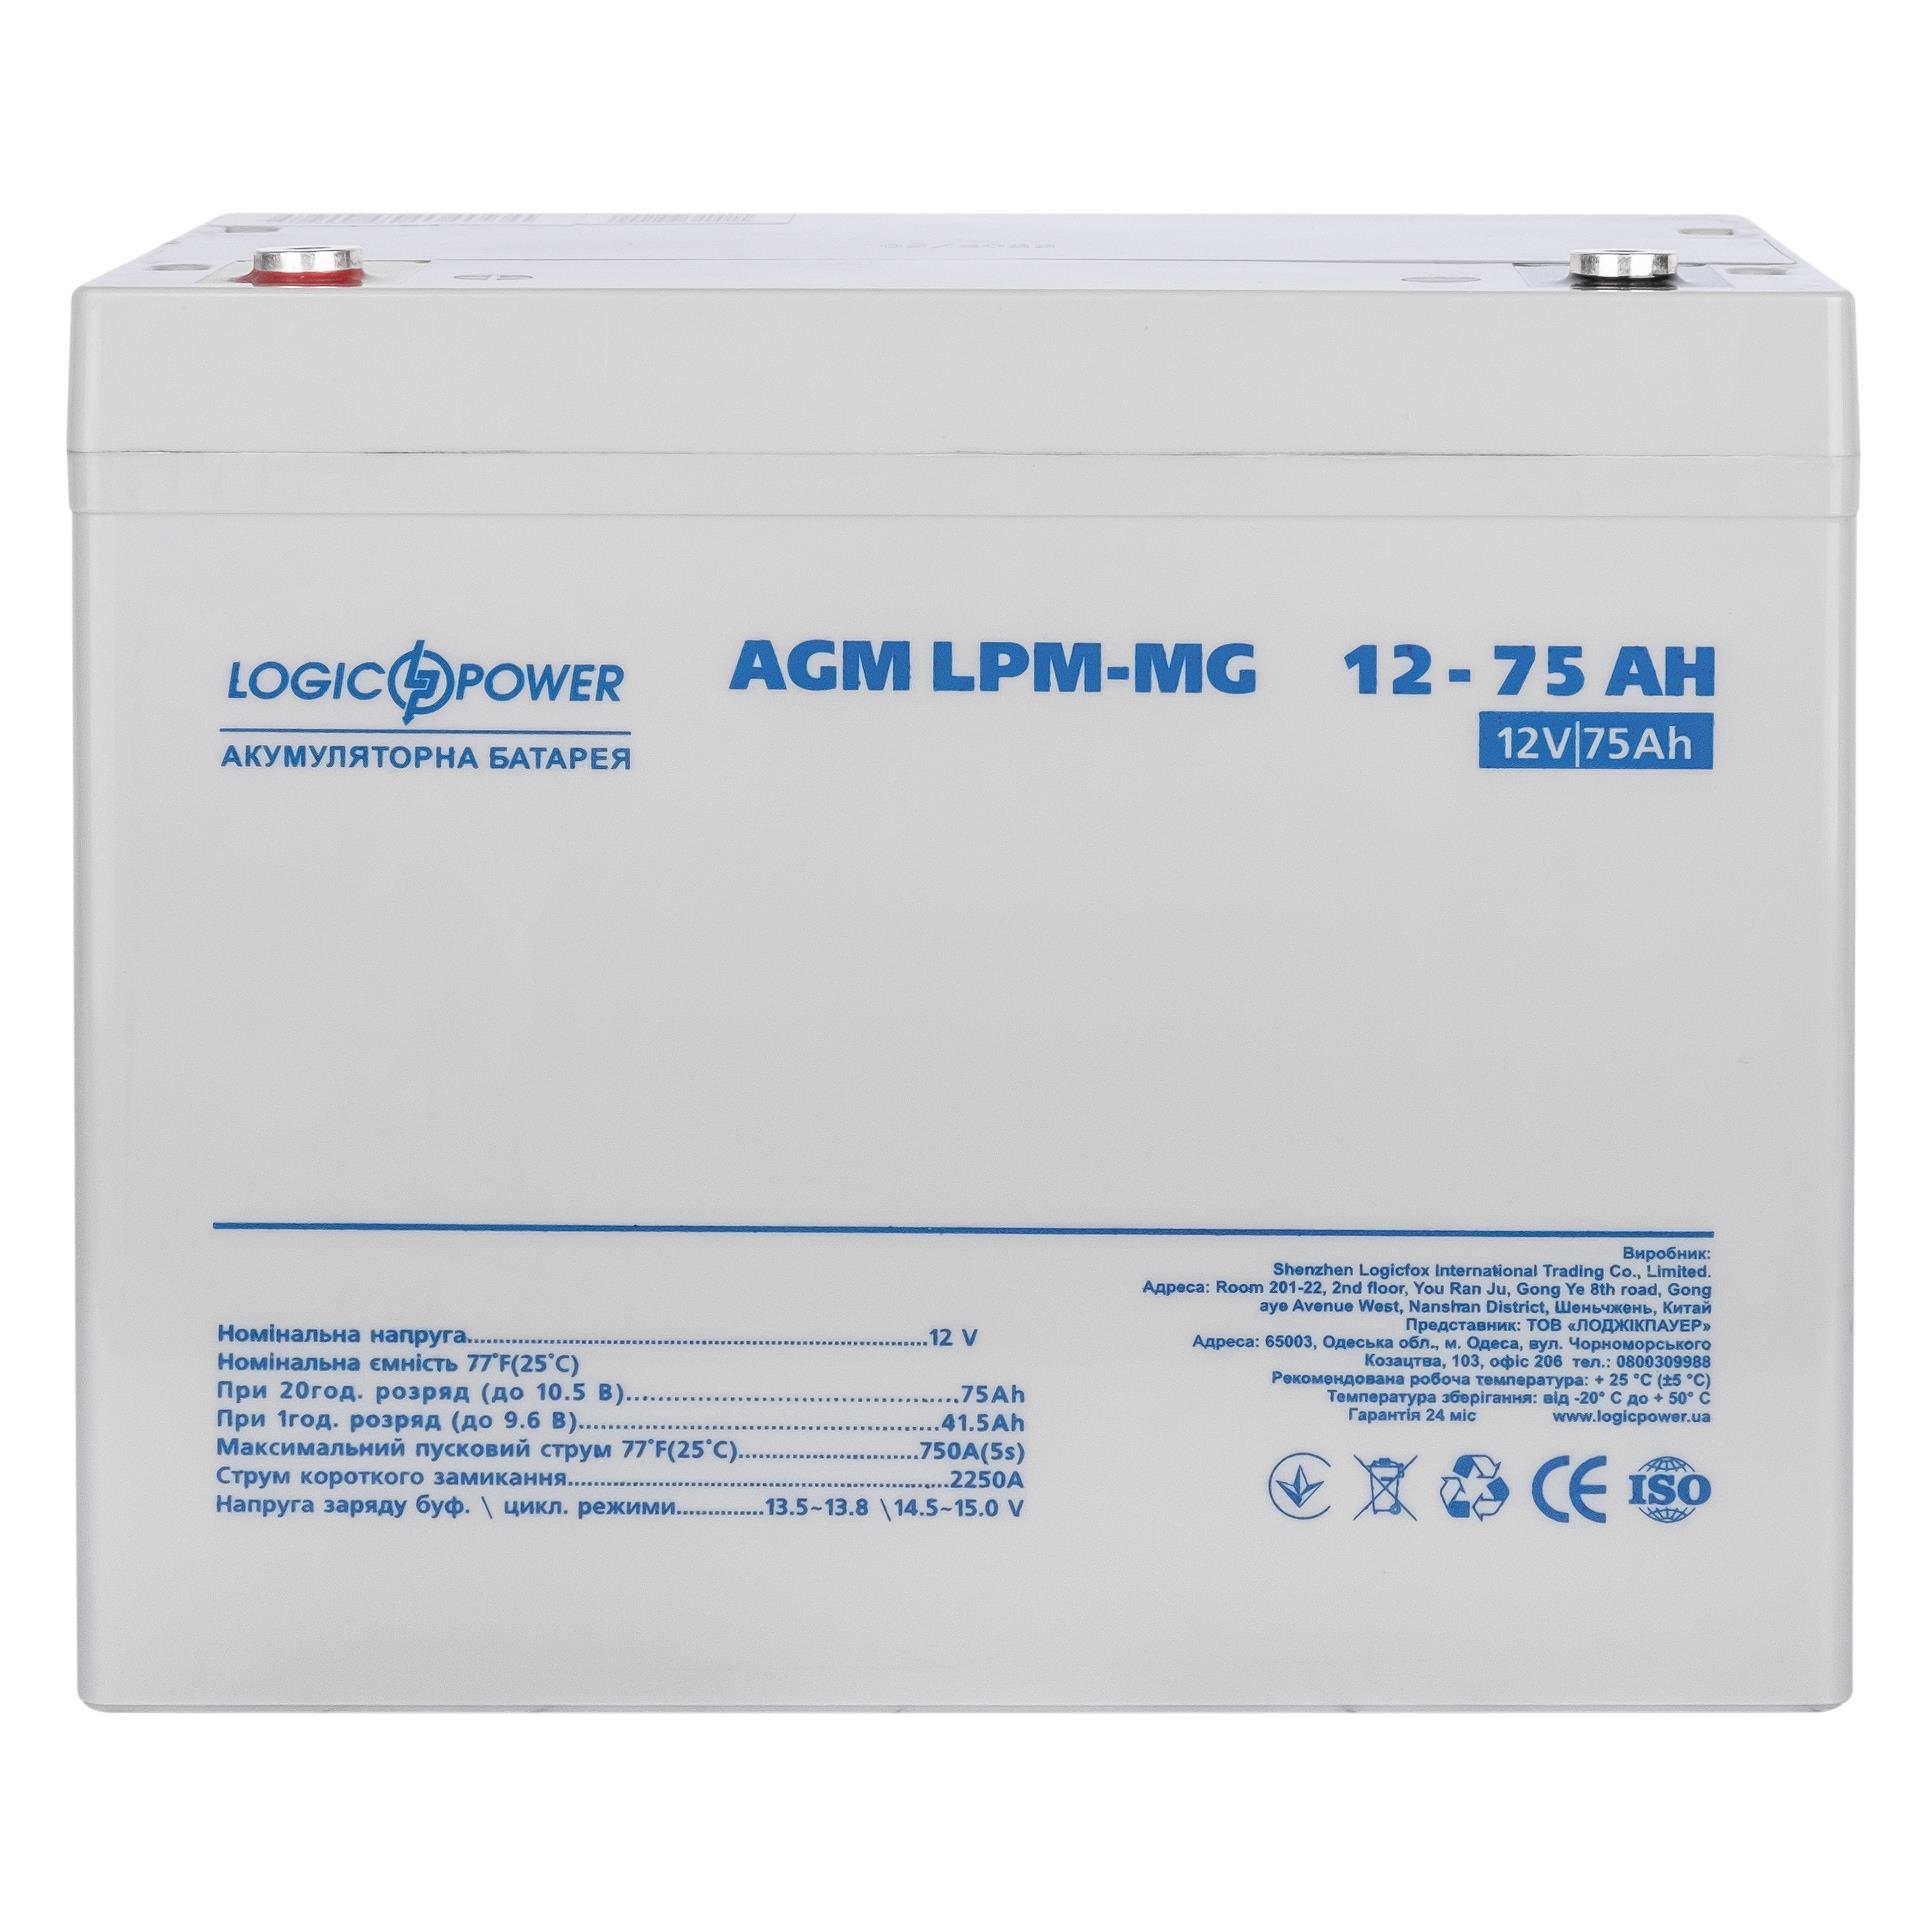 LogicPower LPM-MG 12V - 75 Ah (13634)